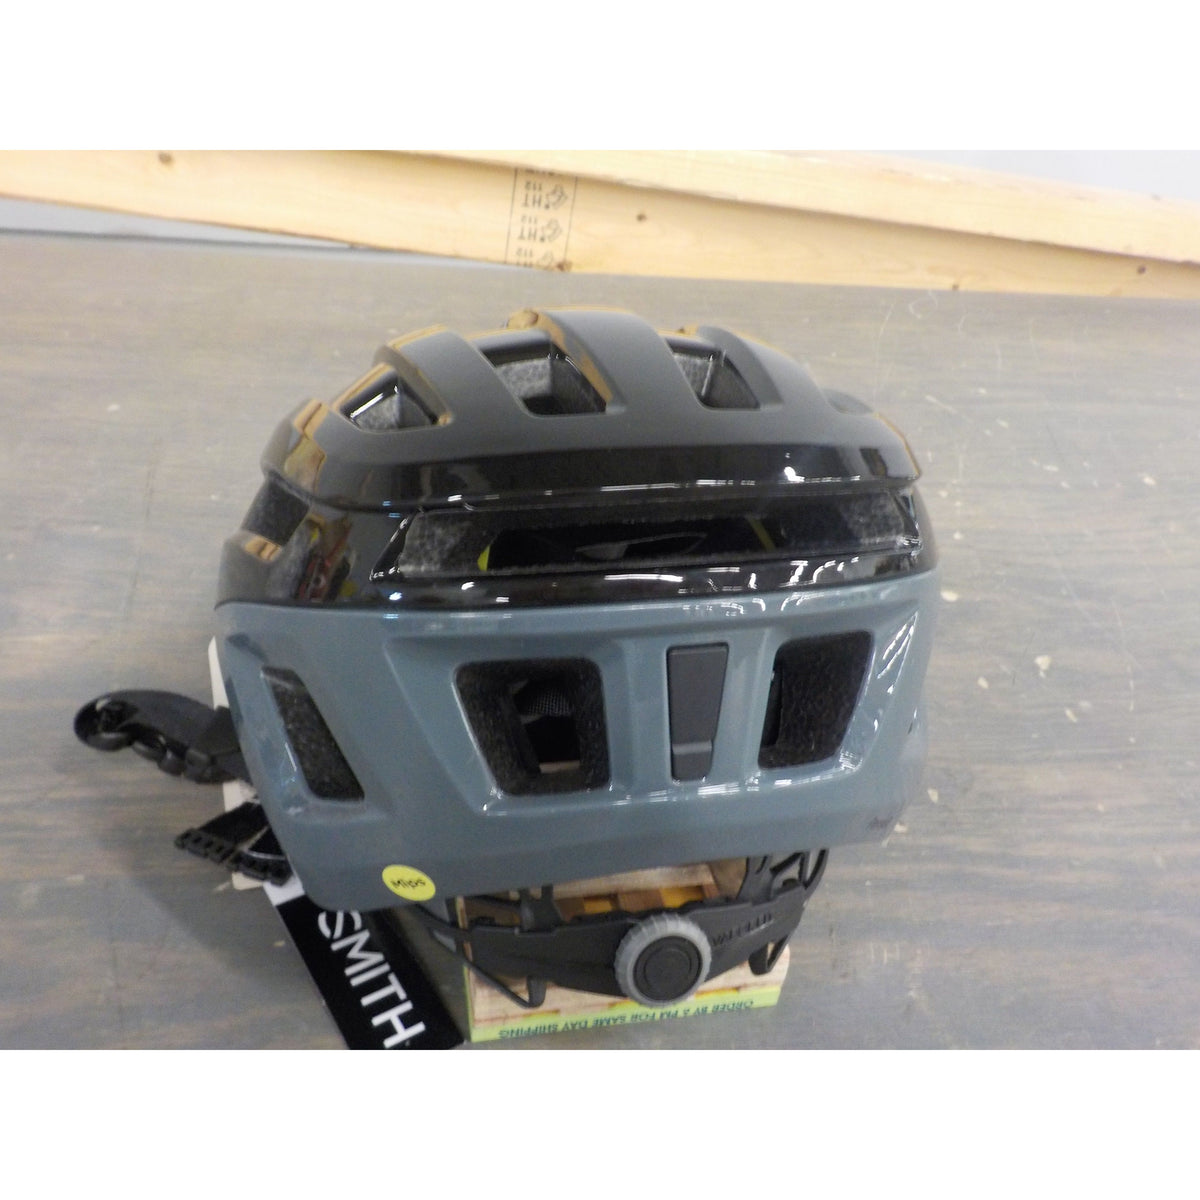 Smith Optics Persist MIPS Bike Helmet - Black/Cement (Discontinued) - Medium - Used - Acceptable